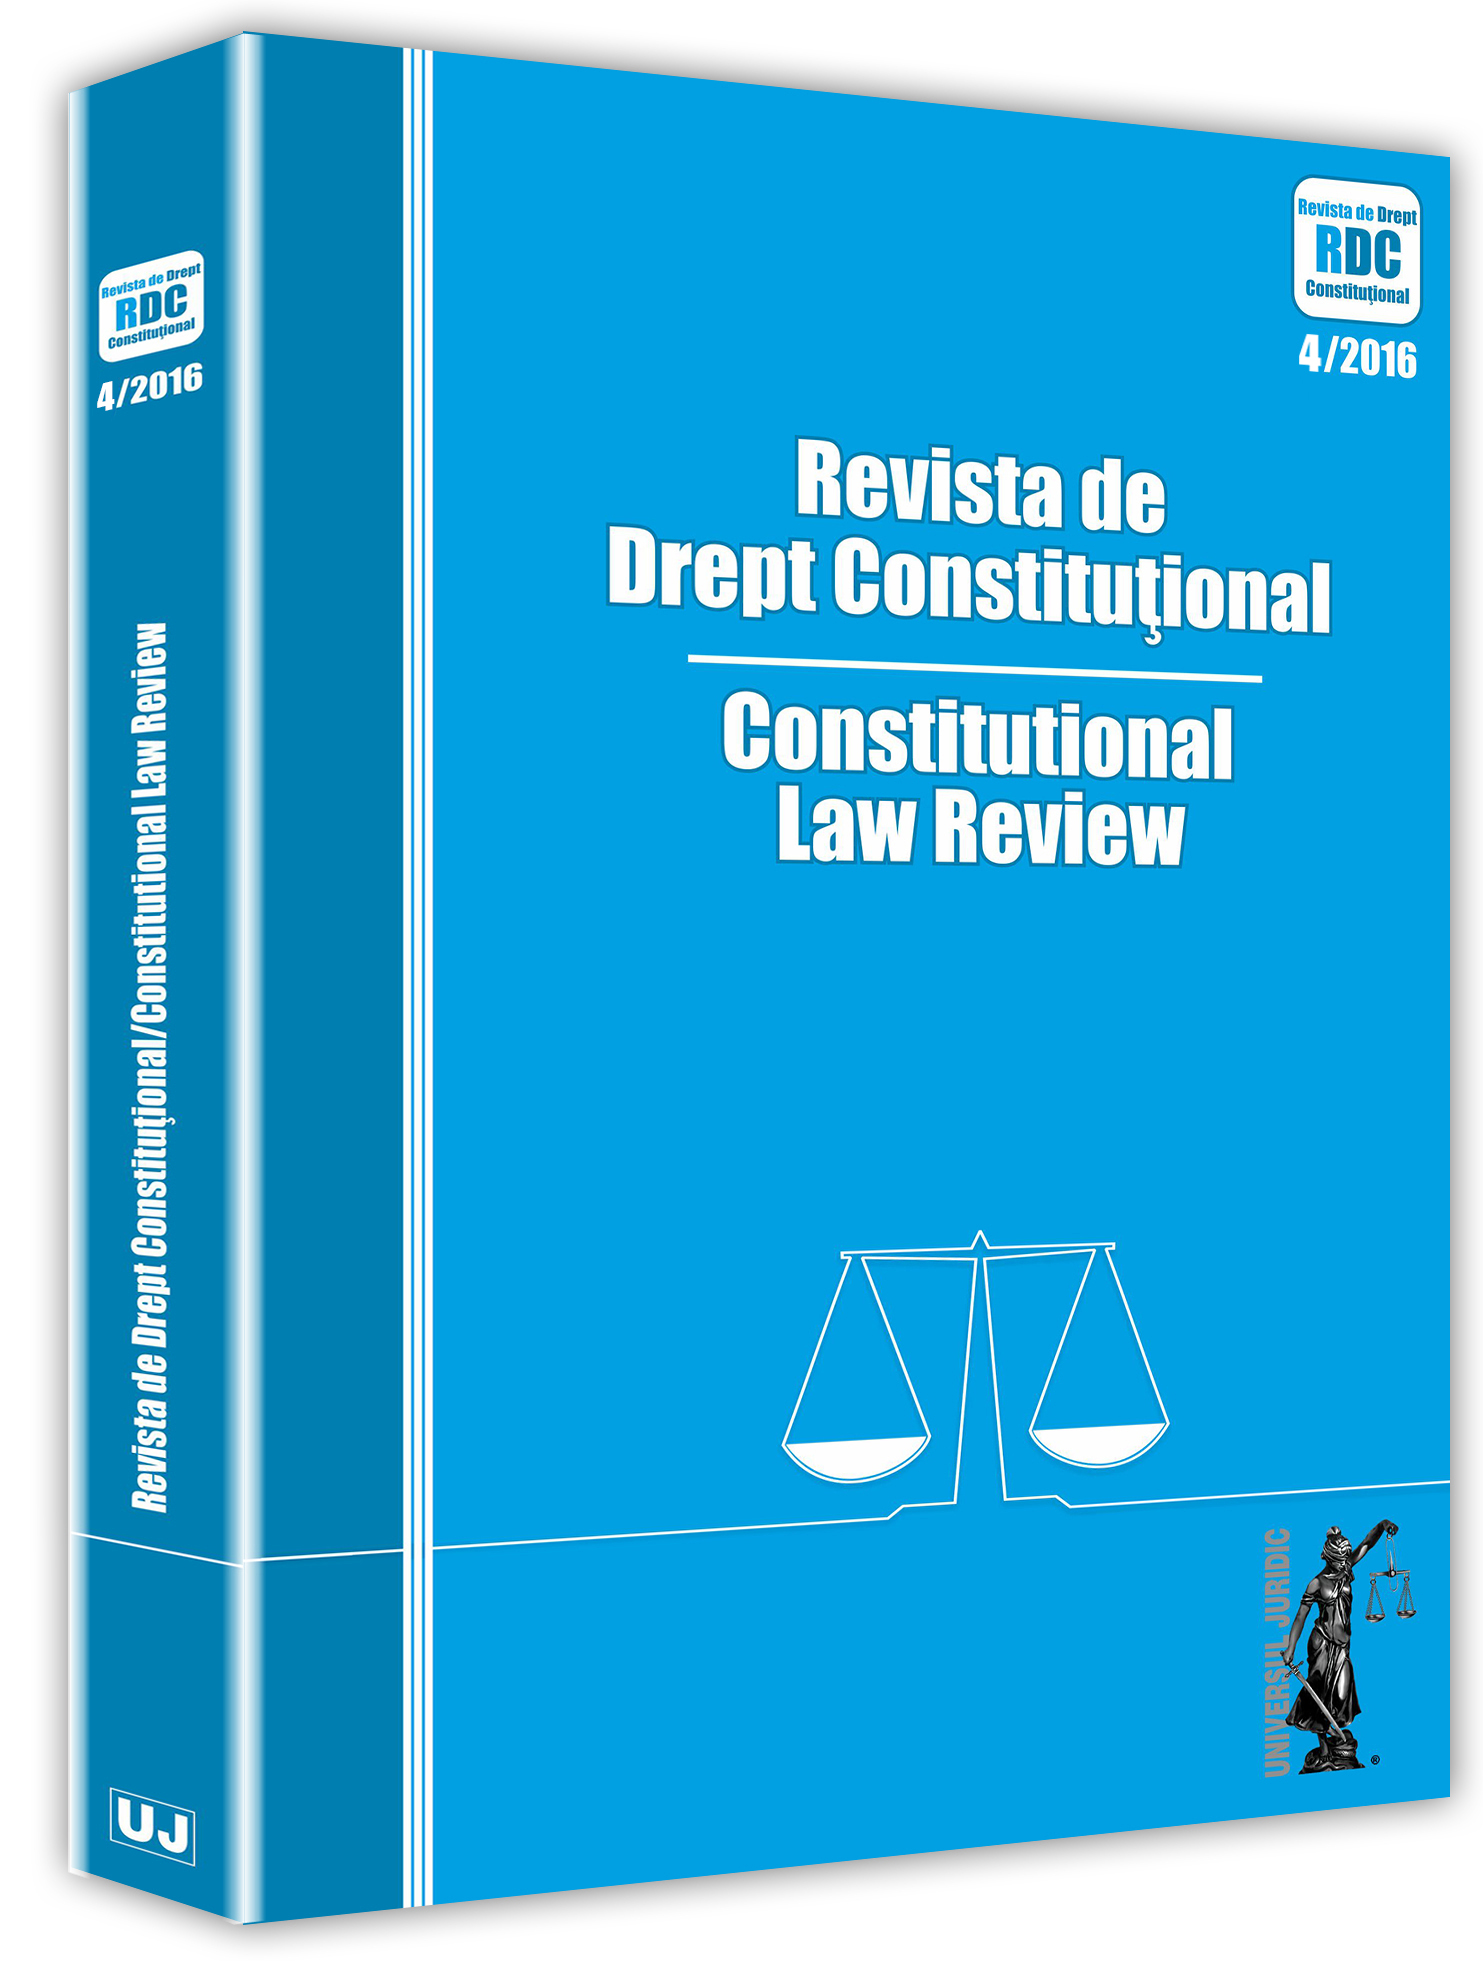 Unconstitutional legislative solutions established through the 2014 Criminal Code Cover Image